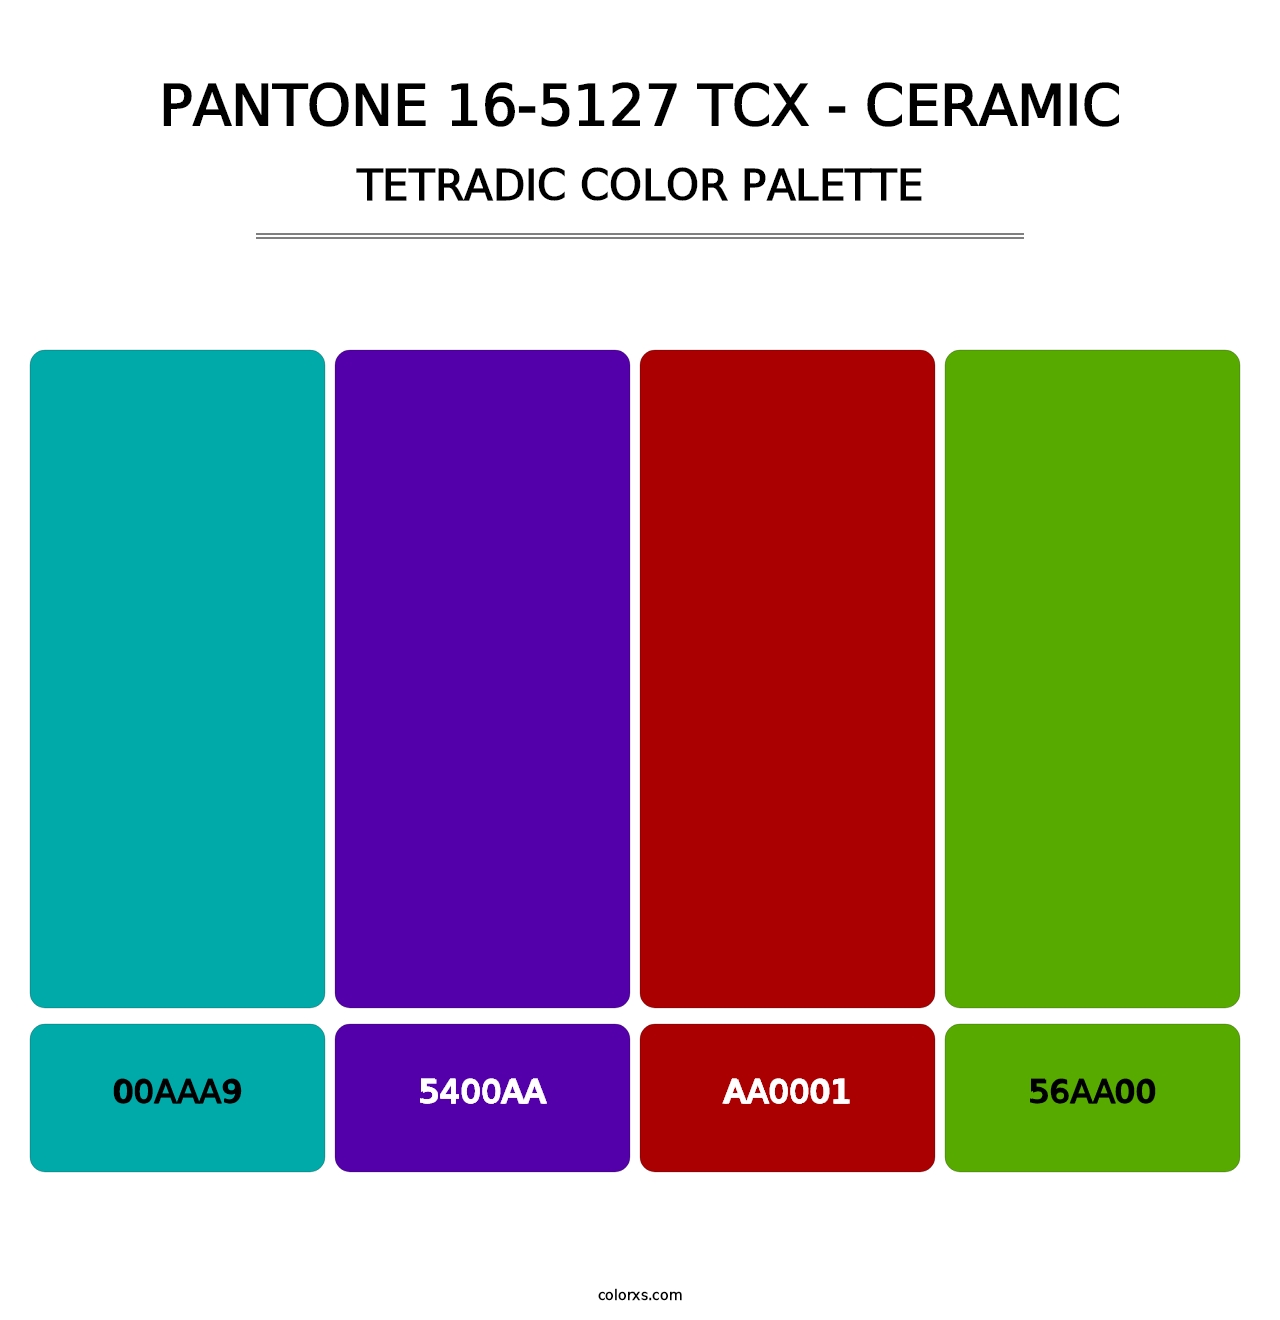 PANTONE 16-5127 TCX - Ceramic - Tetradic Color Palette